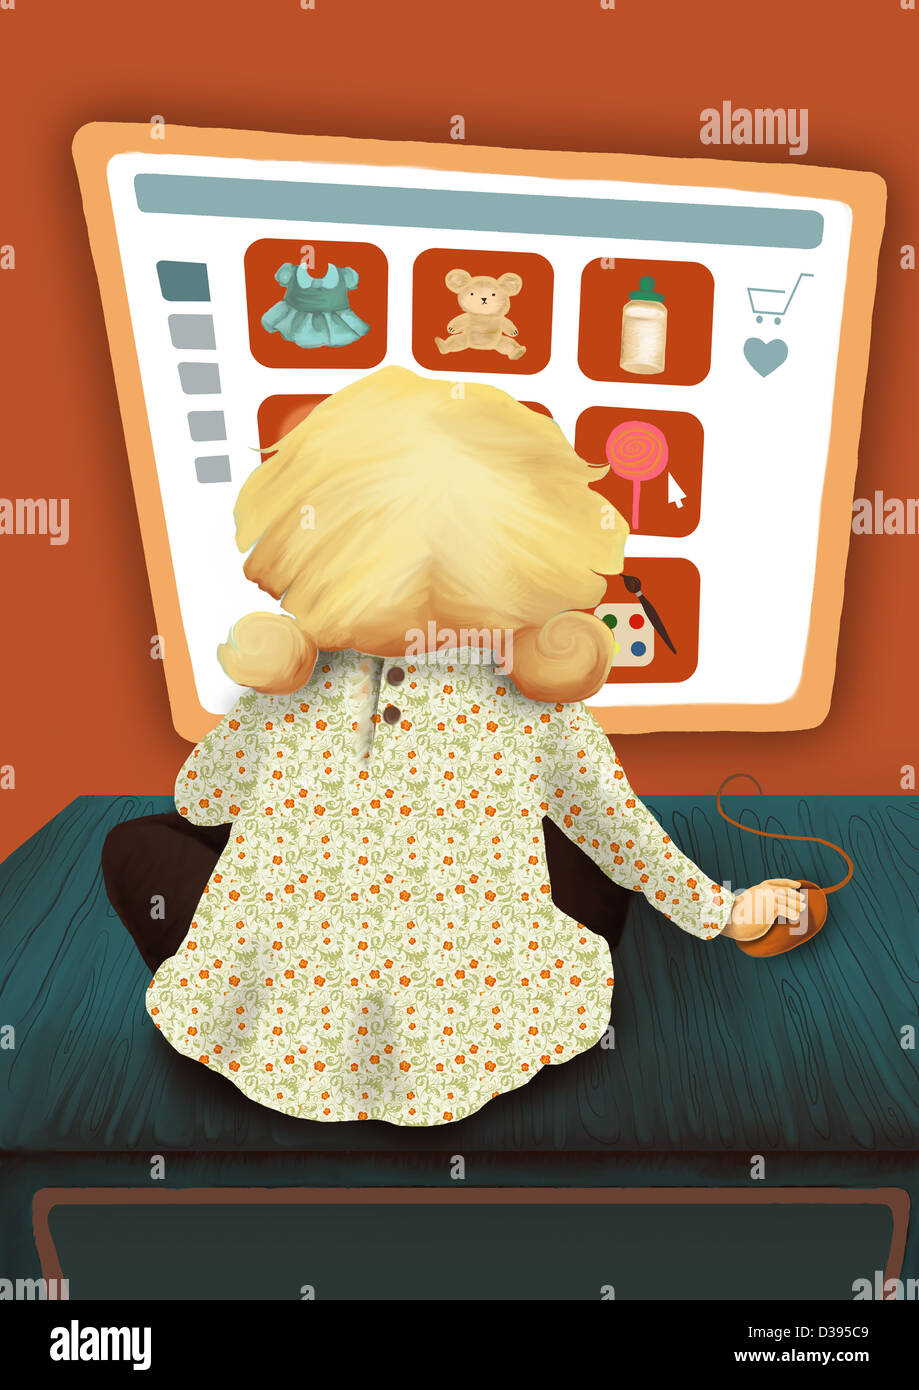 Illustration of kid shopping online Stock Photo